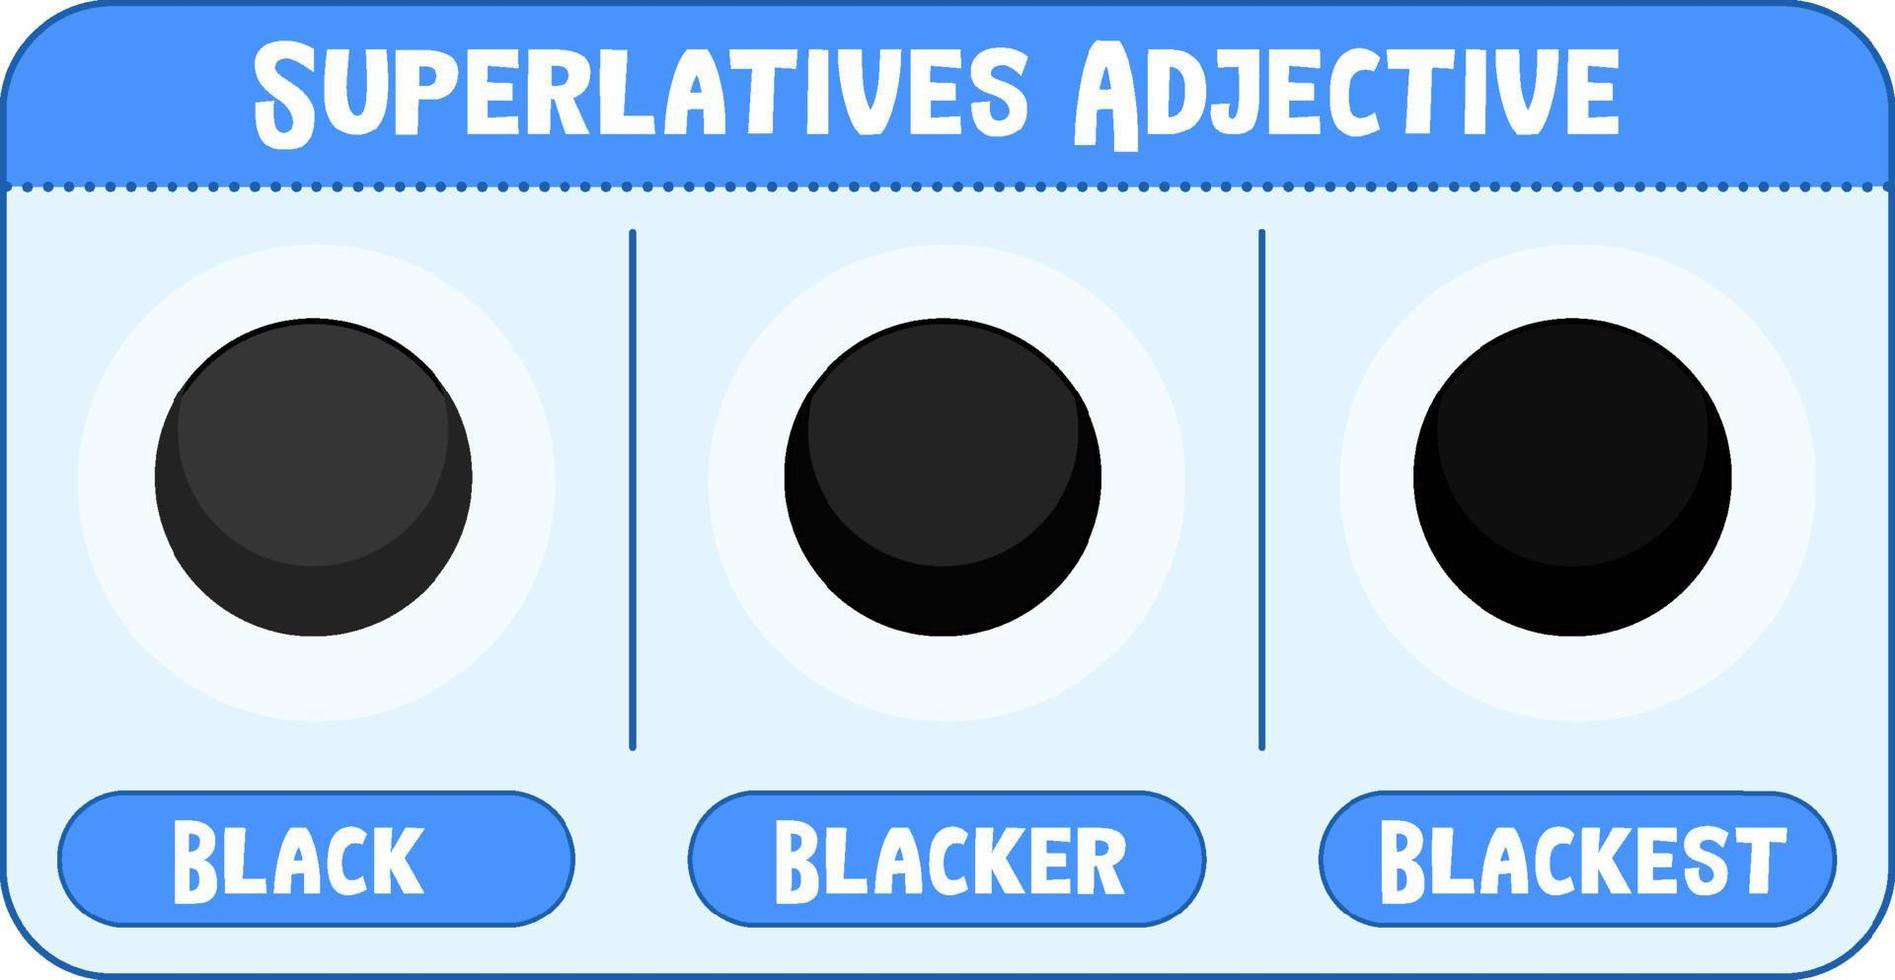 Superlatives Adjectives for word black vector